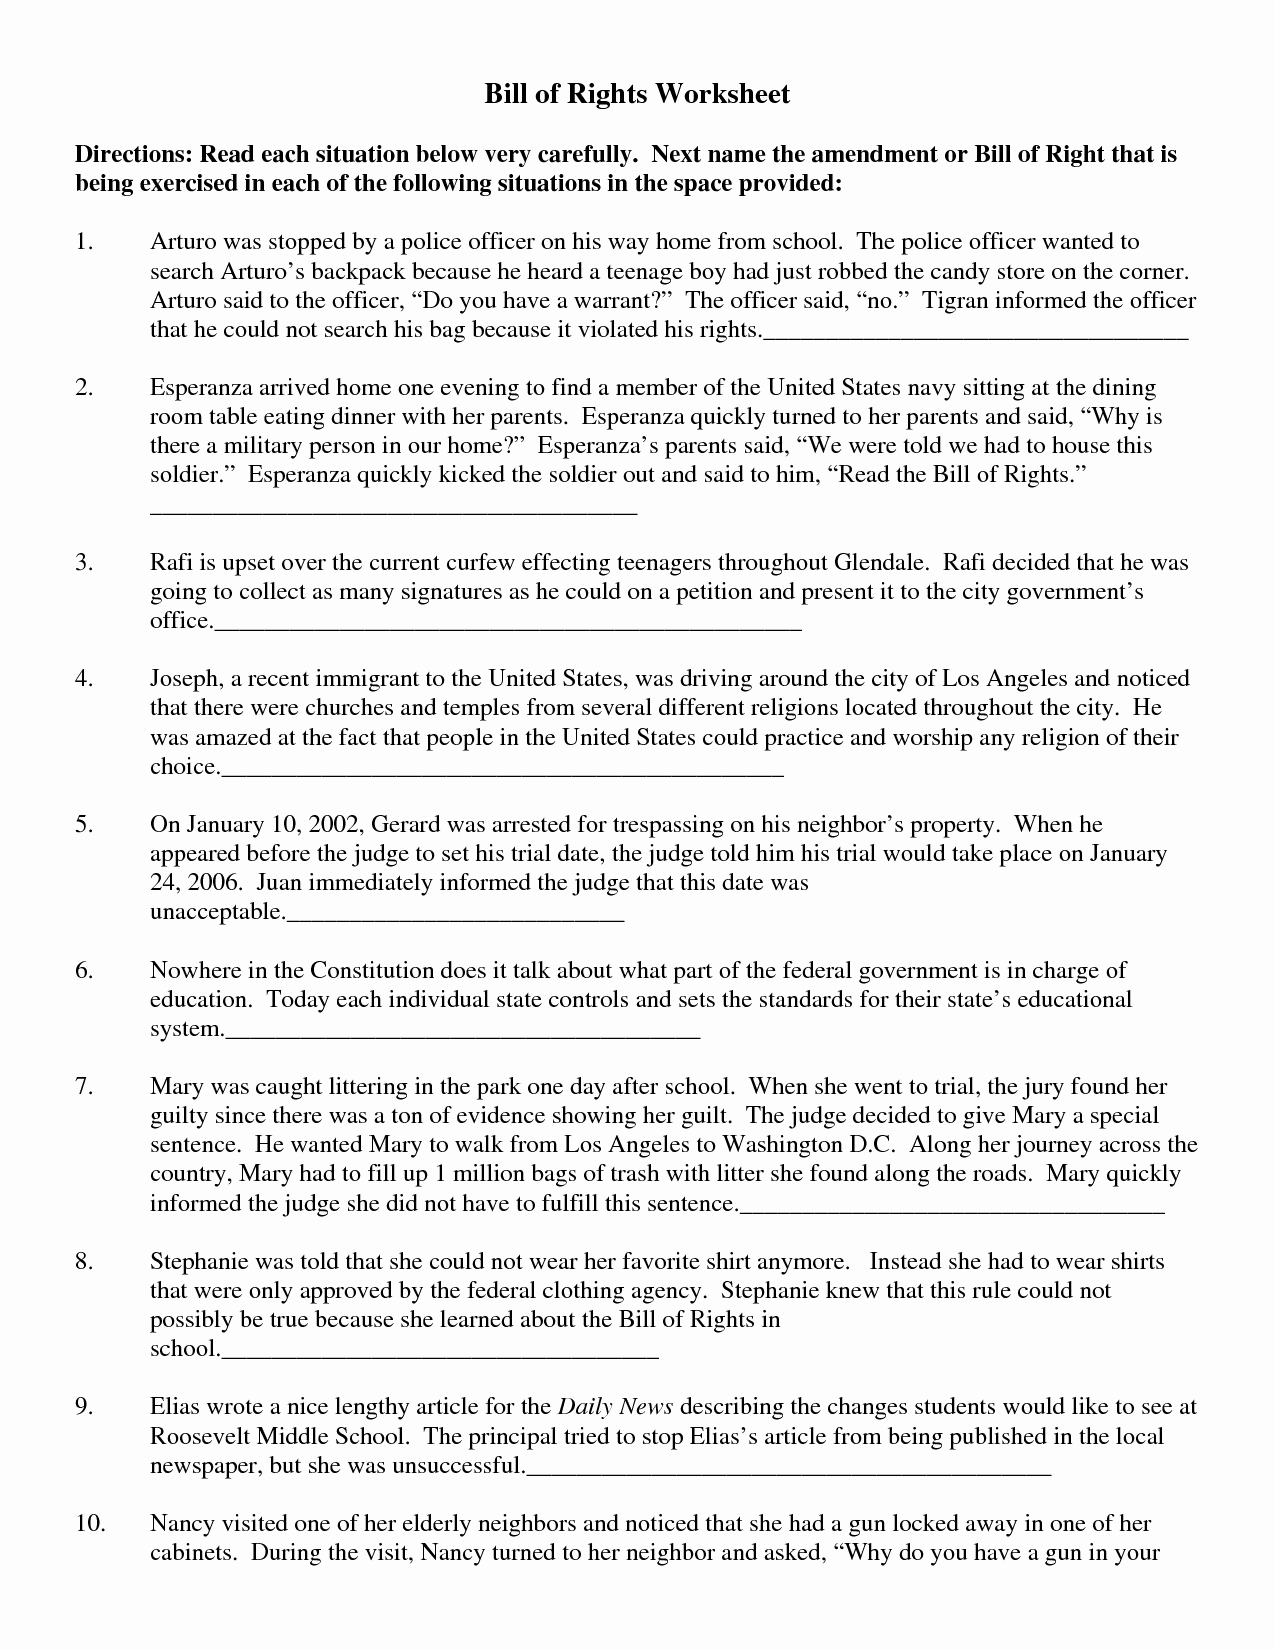 Bill Of Rights Worksheet Answers Inspirational 19 Best Of All Amendment Worksheet 27 Amendments